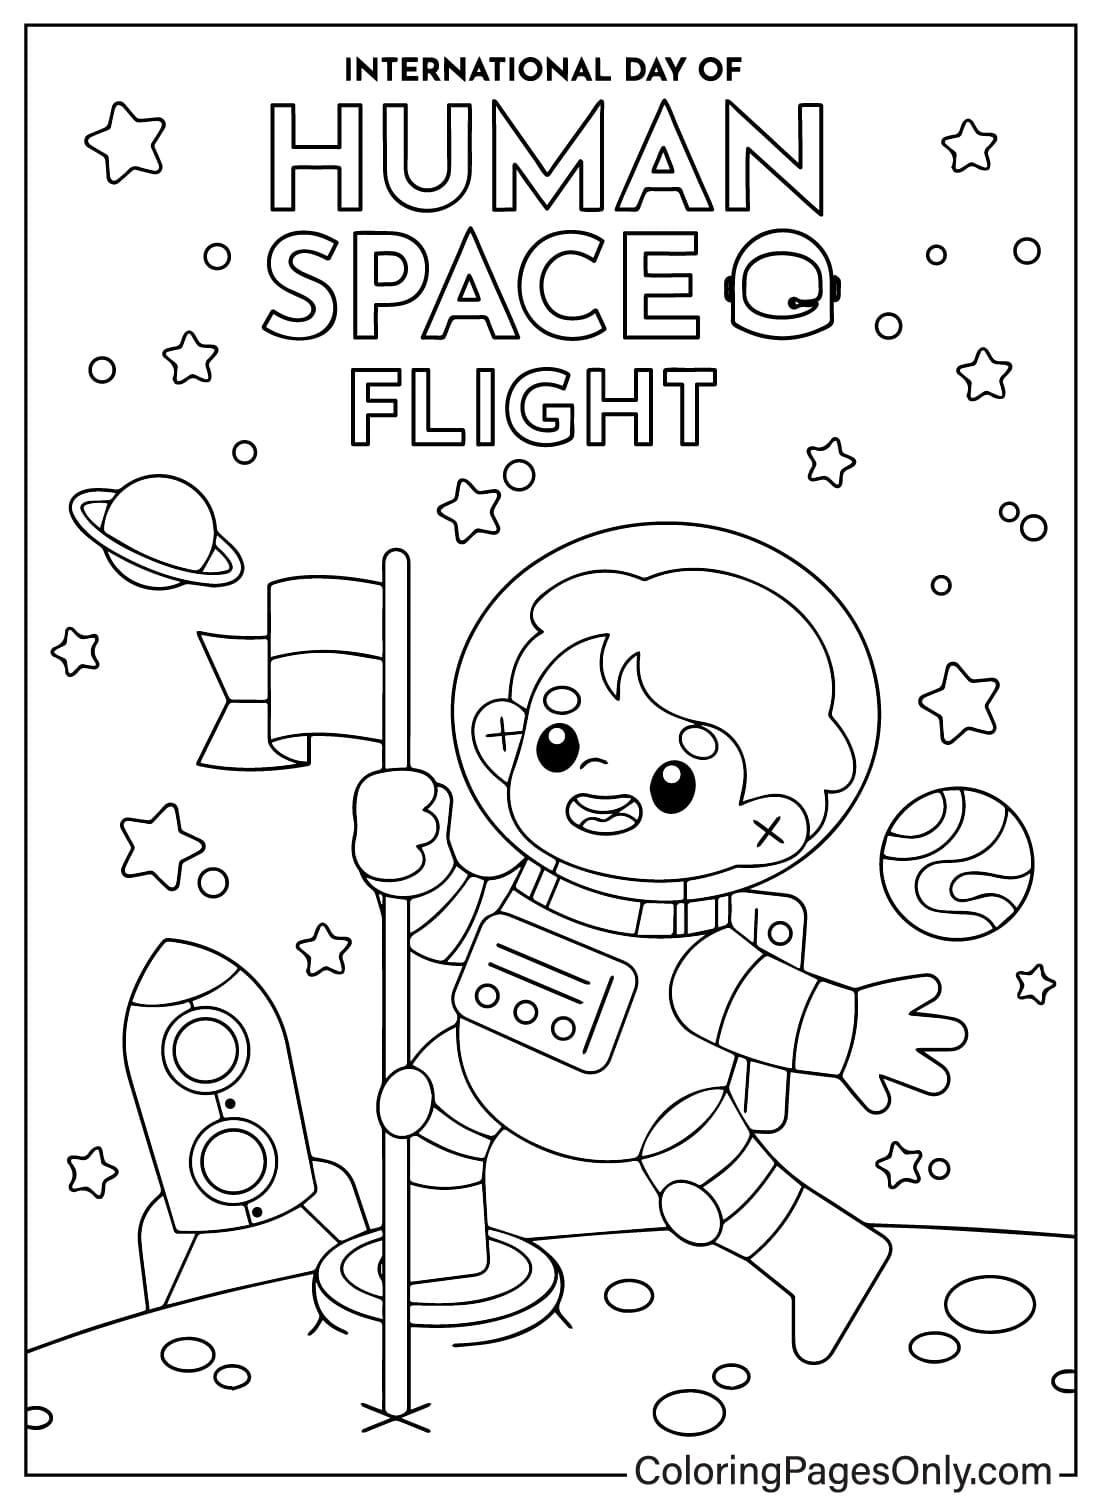 International Day of Human Space Flight Coloring from International Day of Human Space Flight